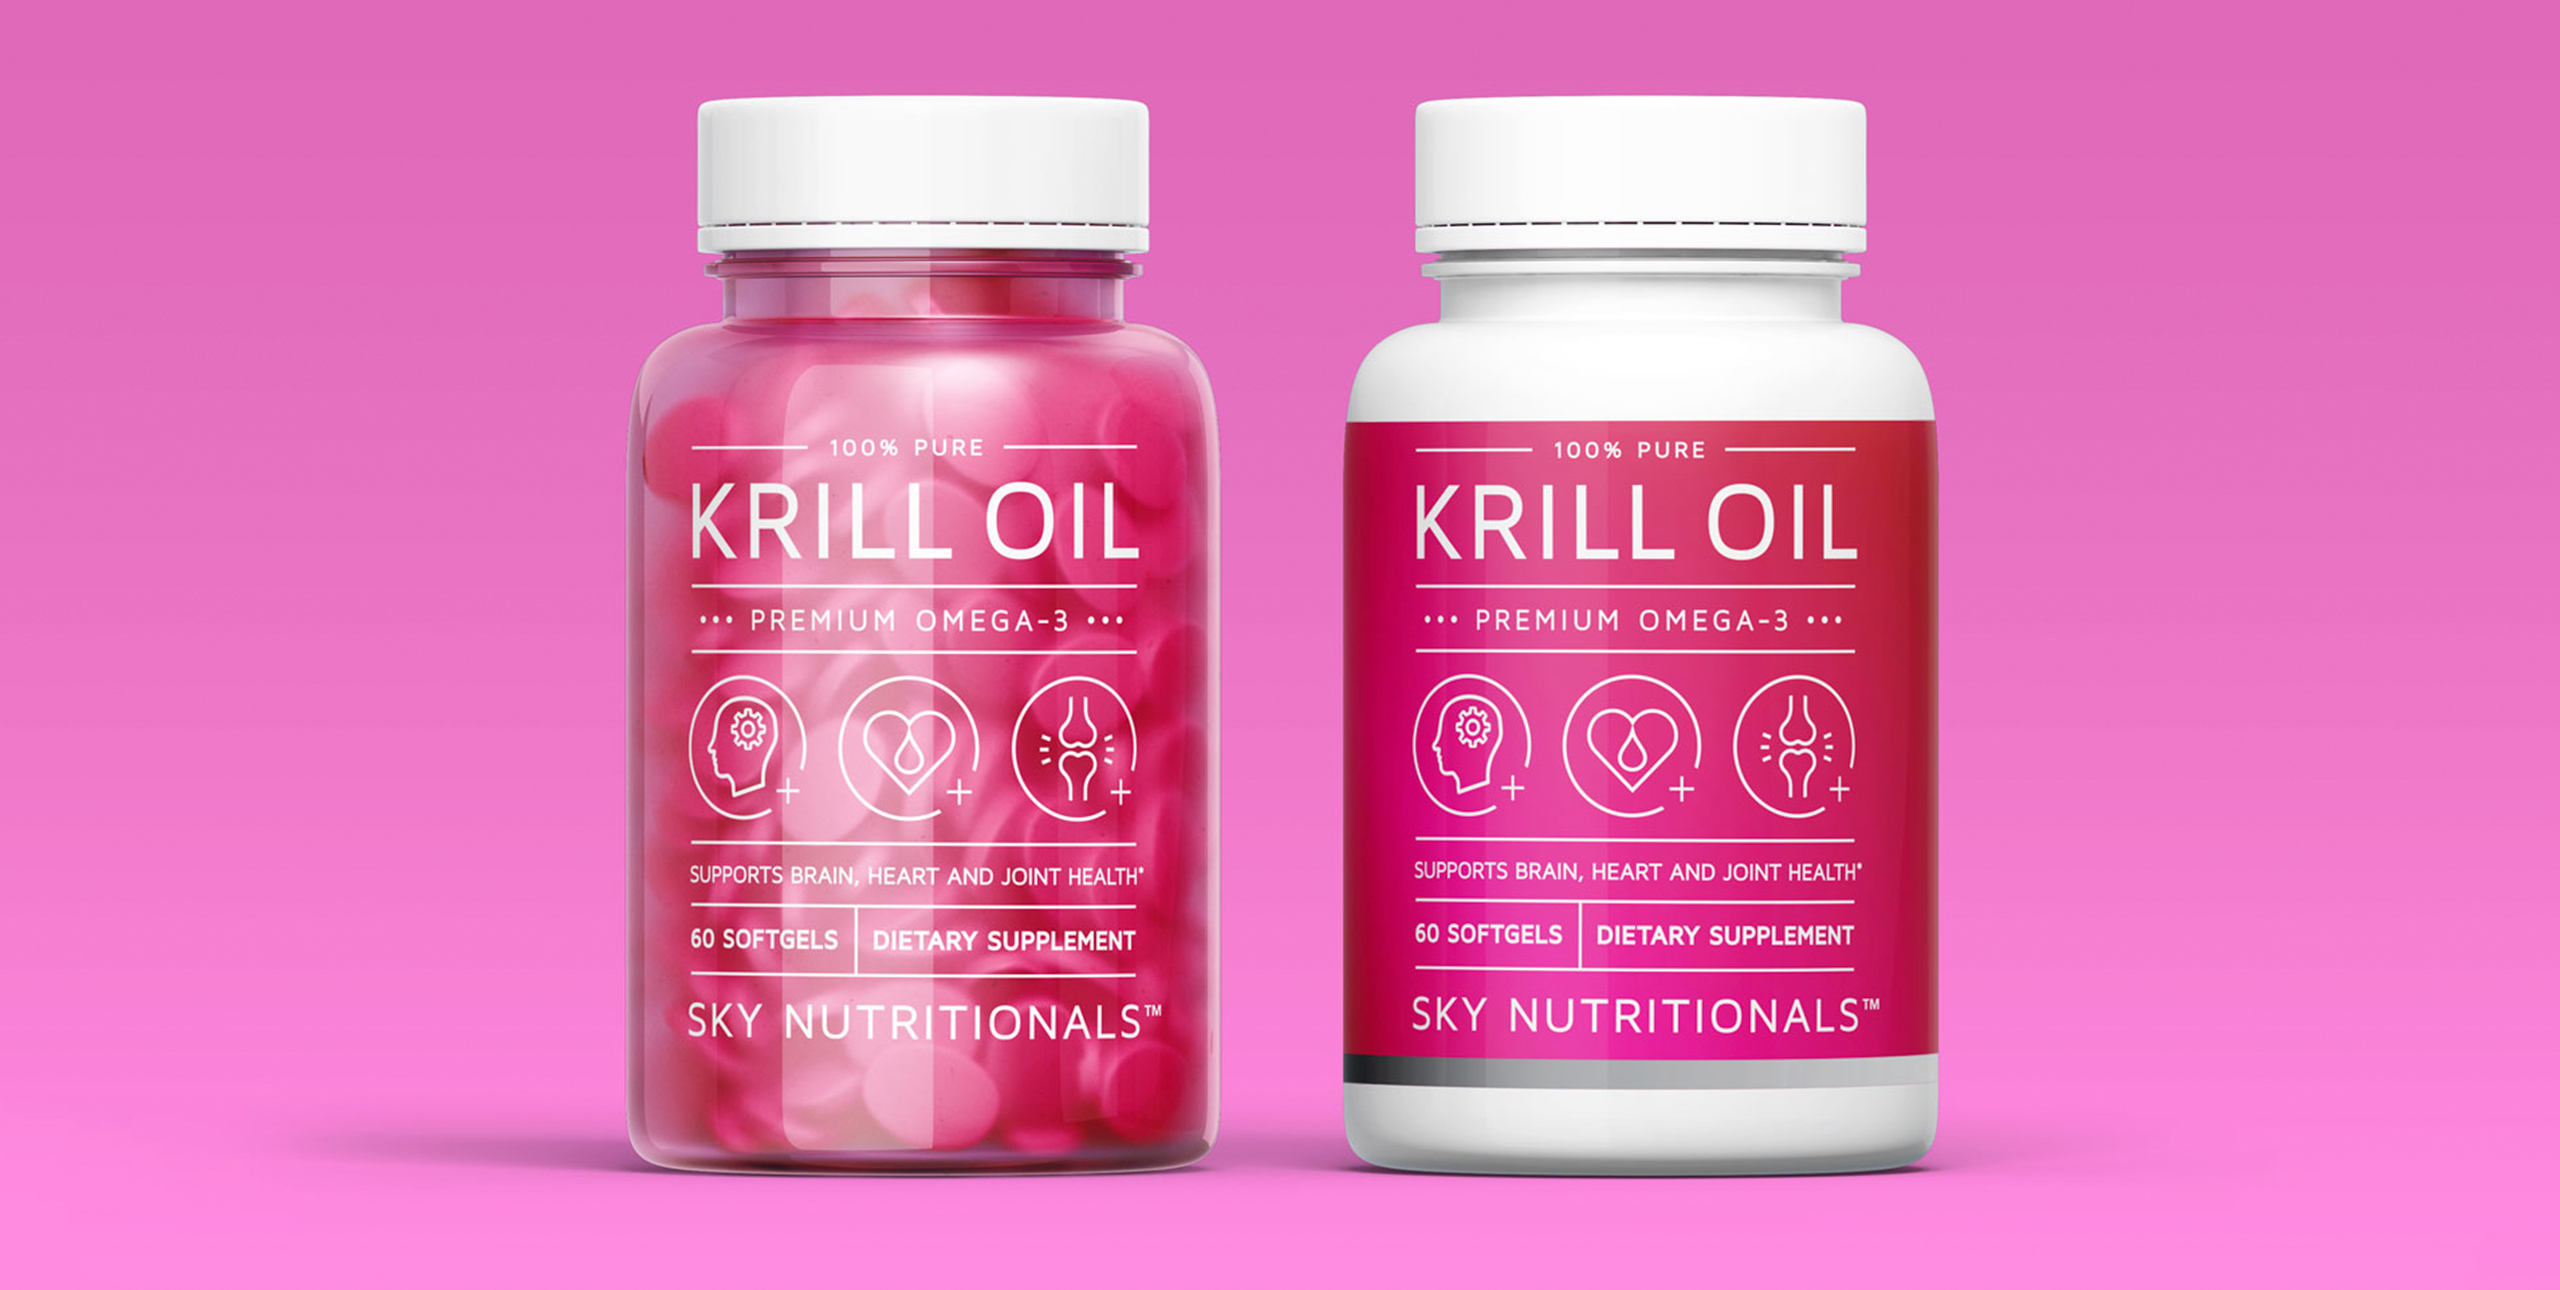 Sky Nutritionals krill oil bottle packaging design 